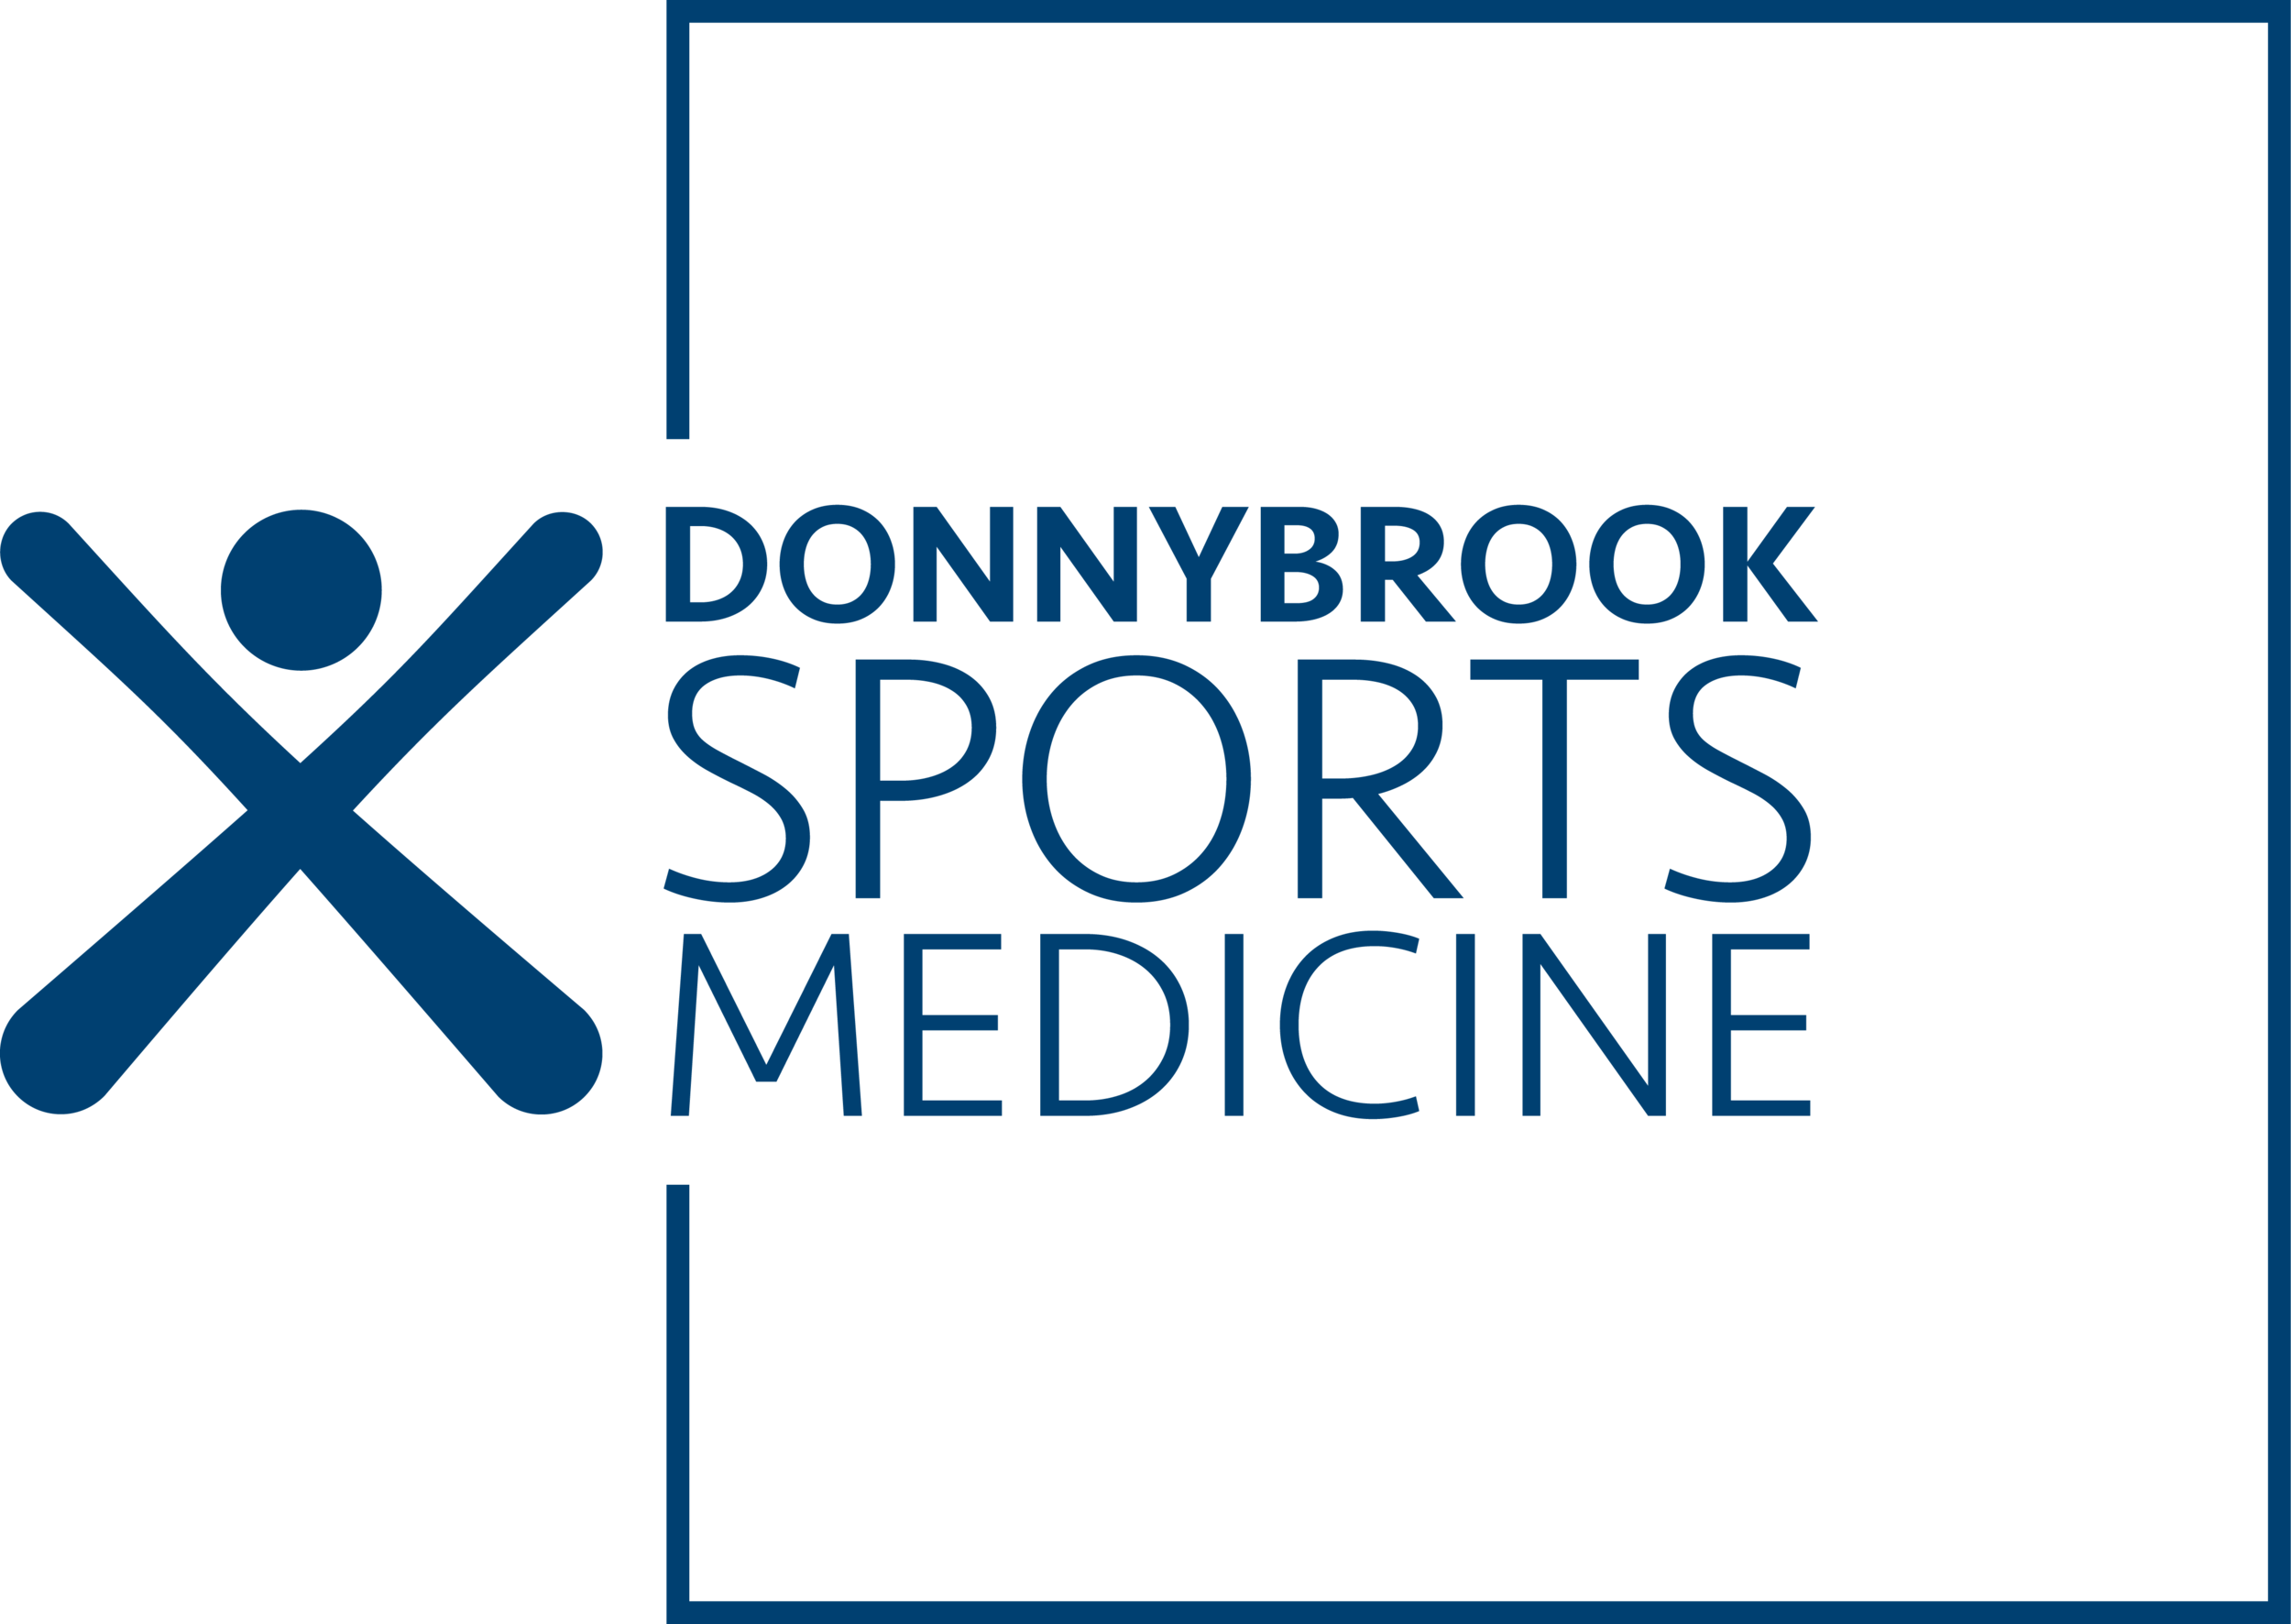 Donnybrook Sports Medicine